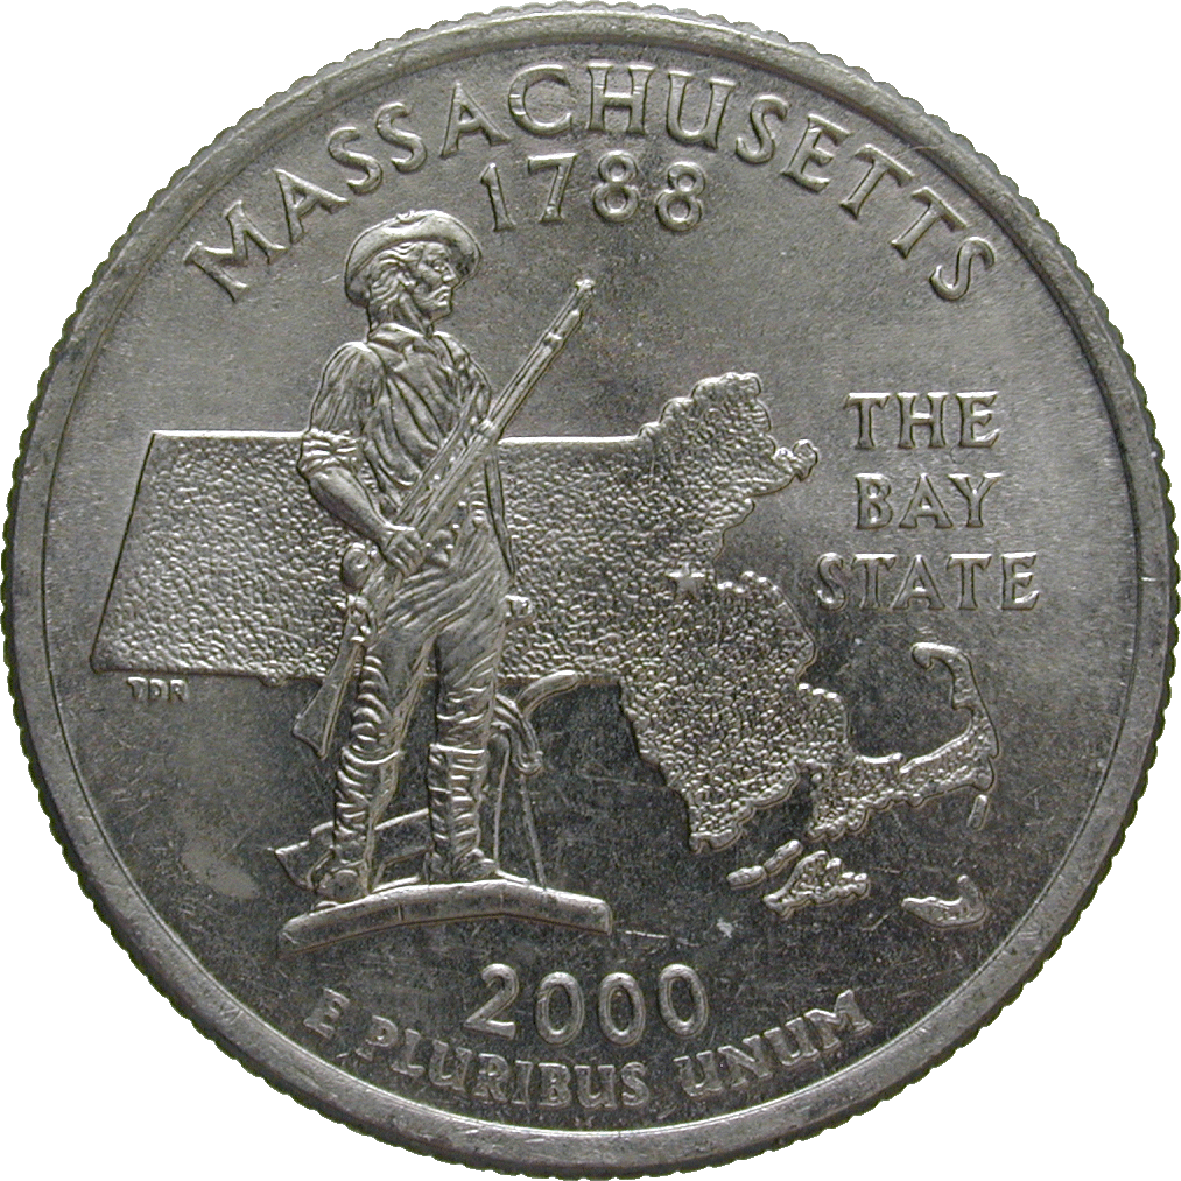 United States of America, Quarter Dollar 2000 (reverse)